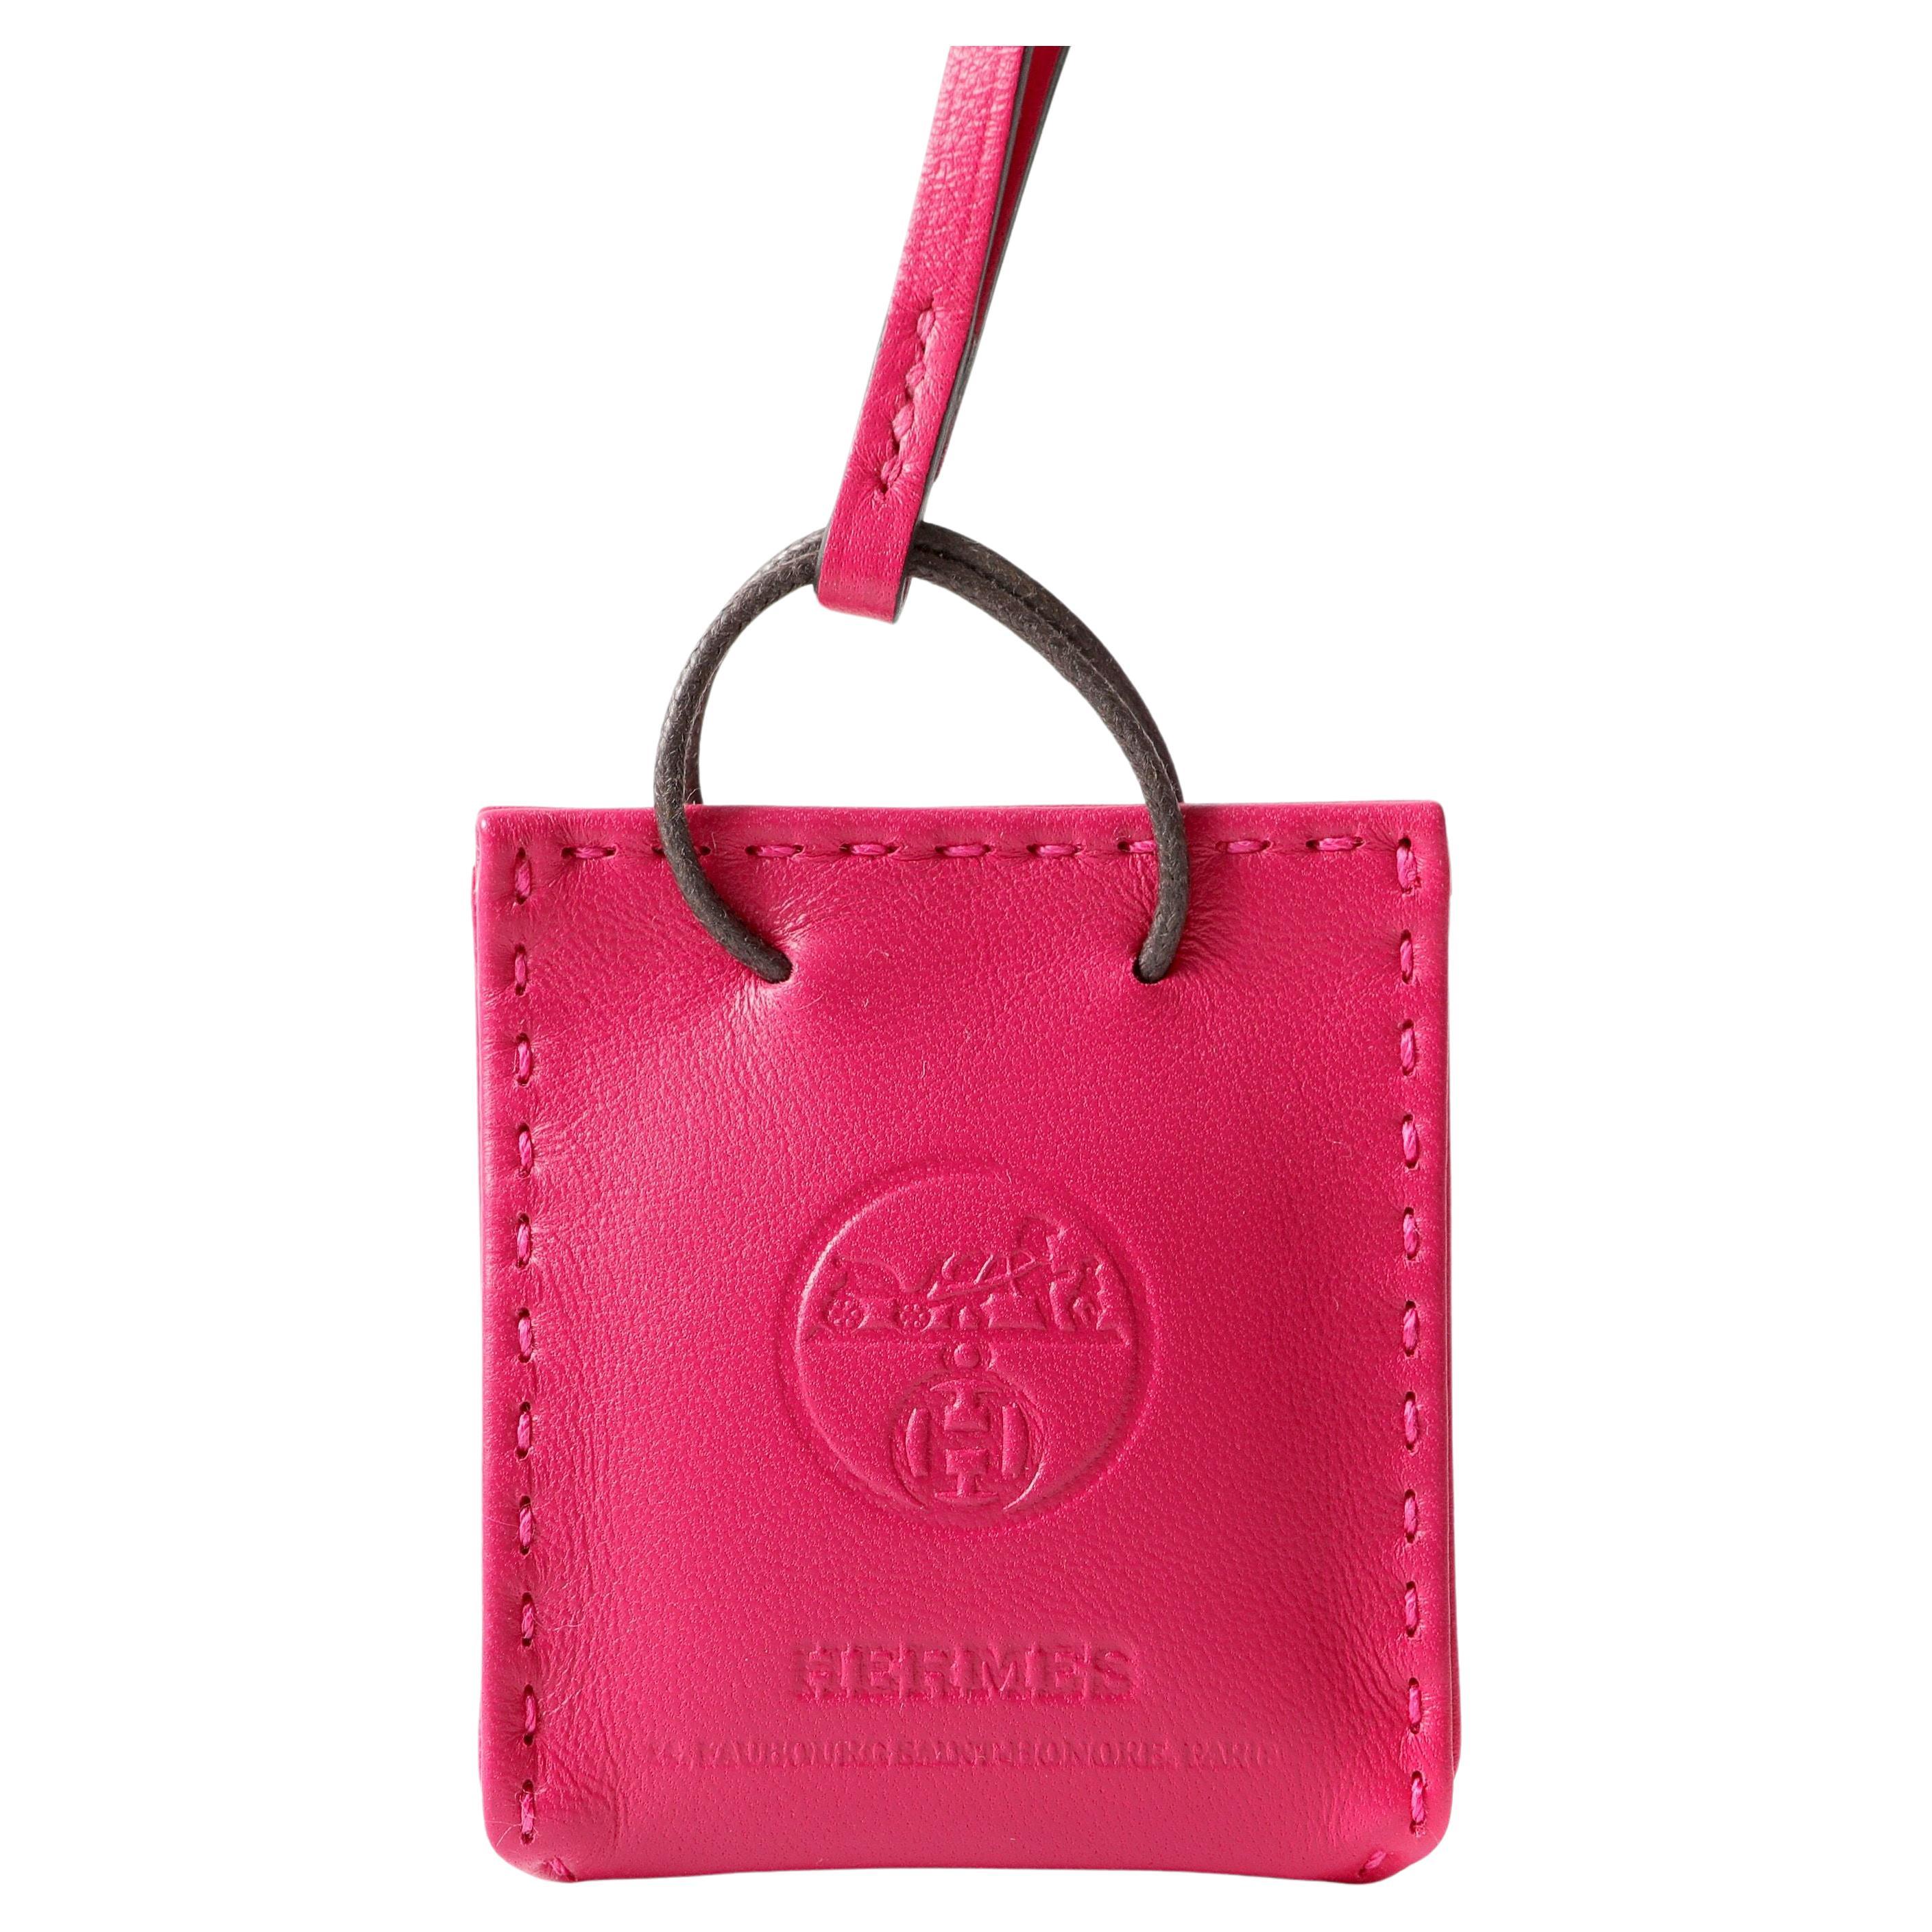 Hermès Pink Shopping Bag Charm For Sale